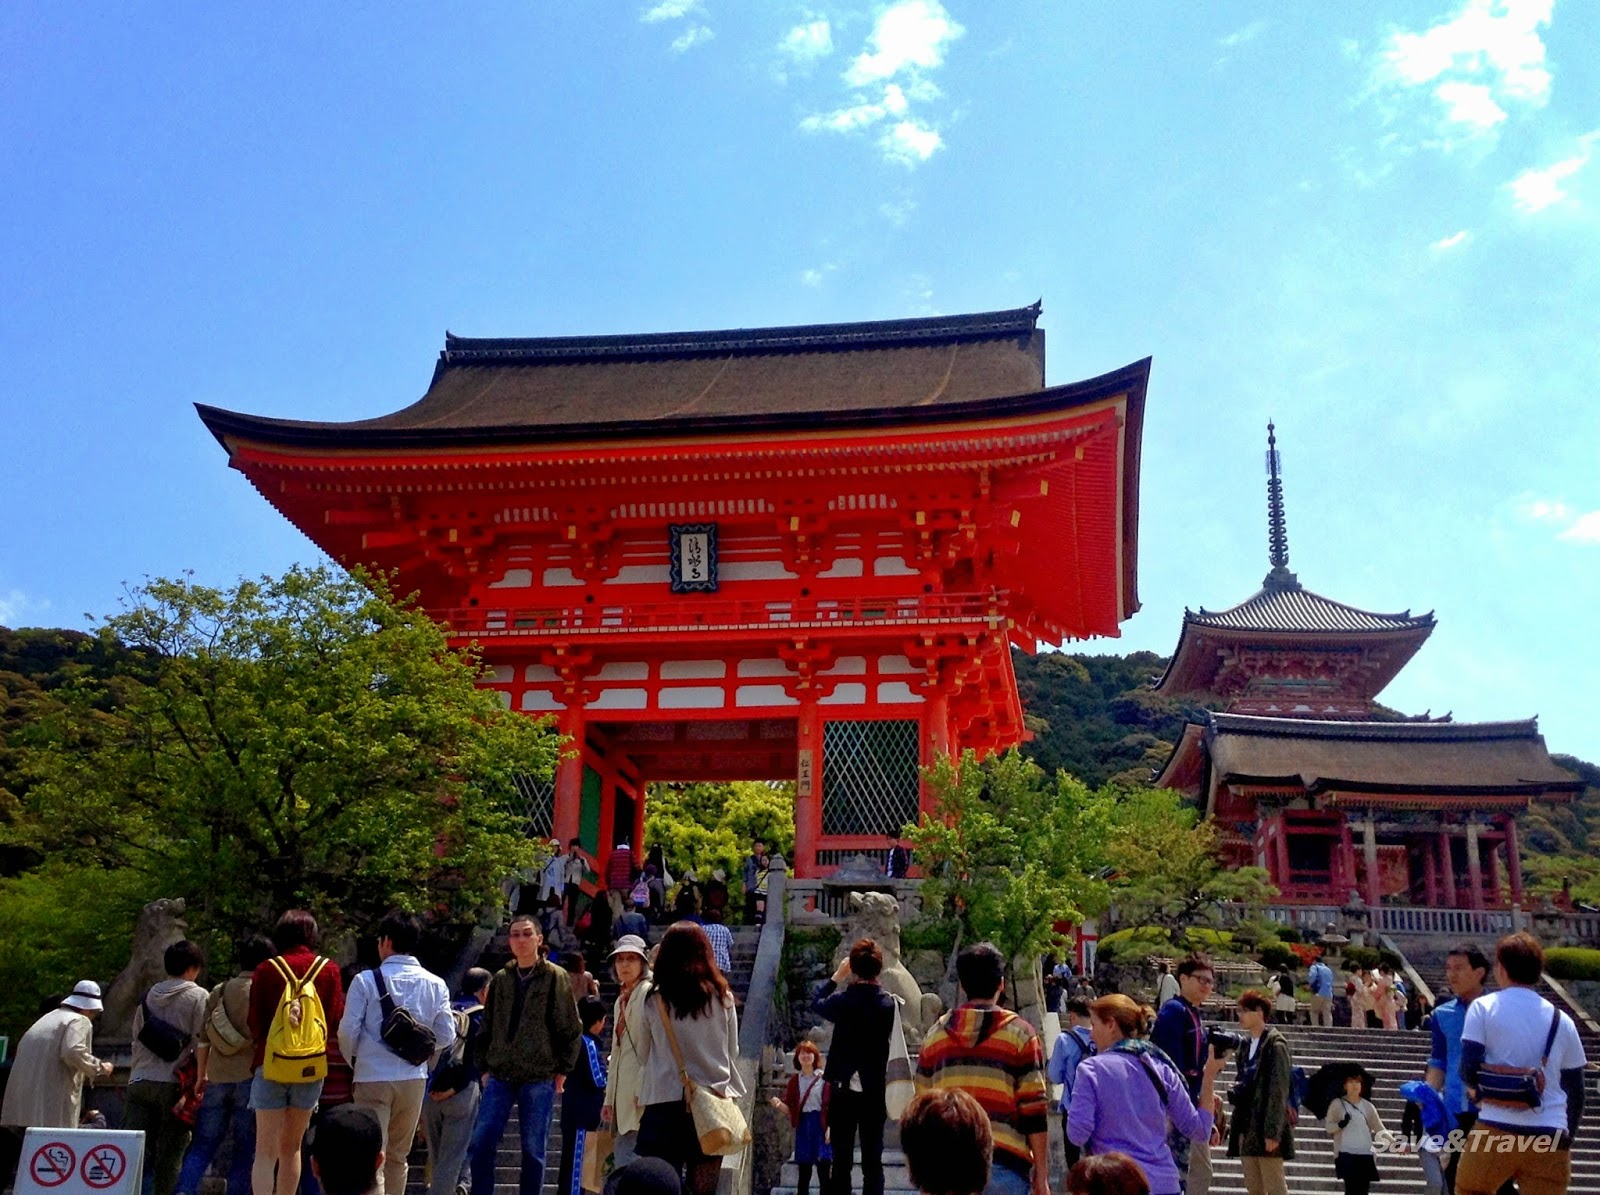 Save & Travel: Japan Golden Week - Kyoto 2/2